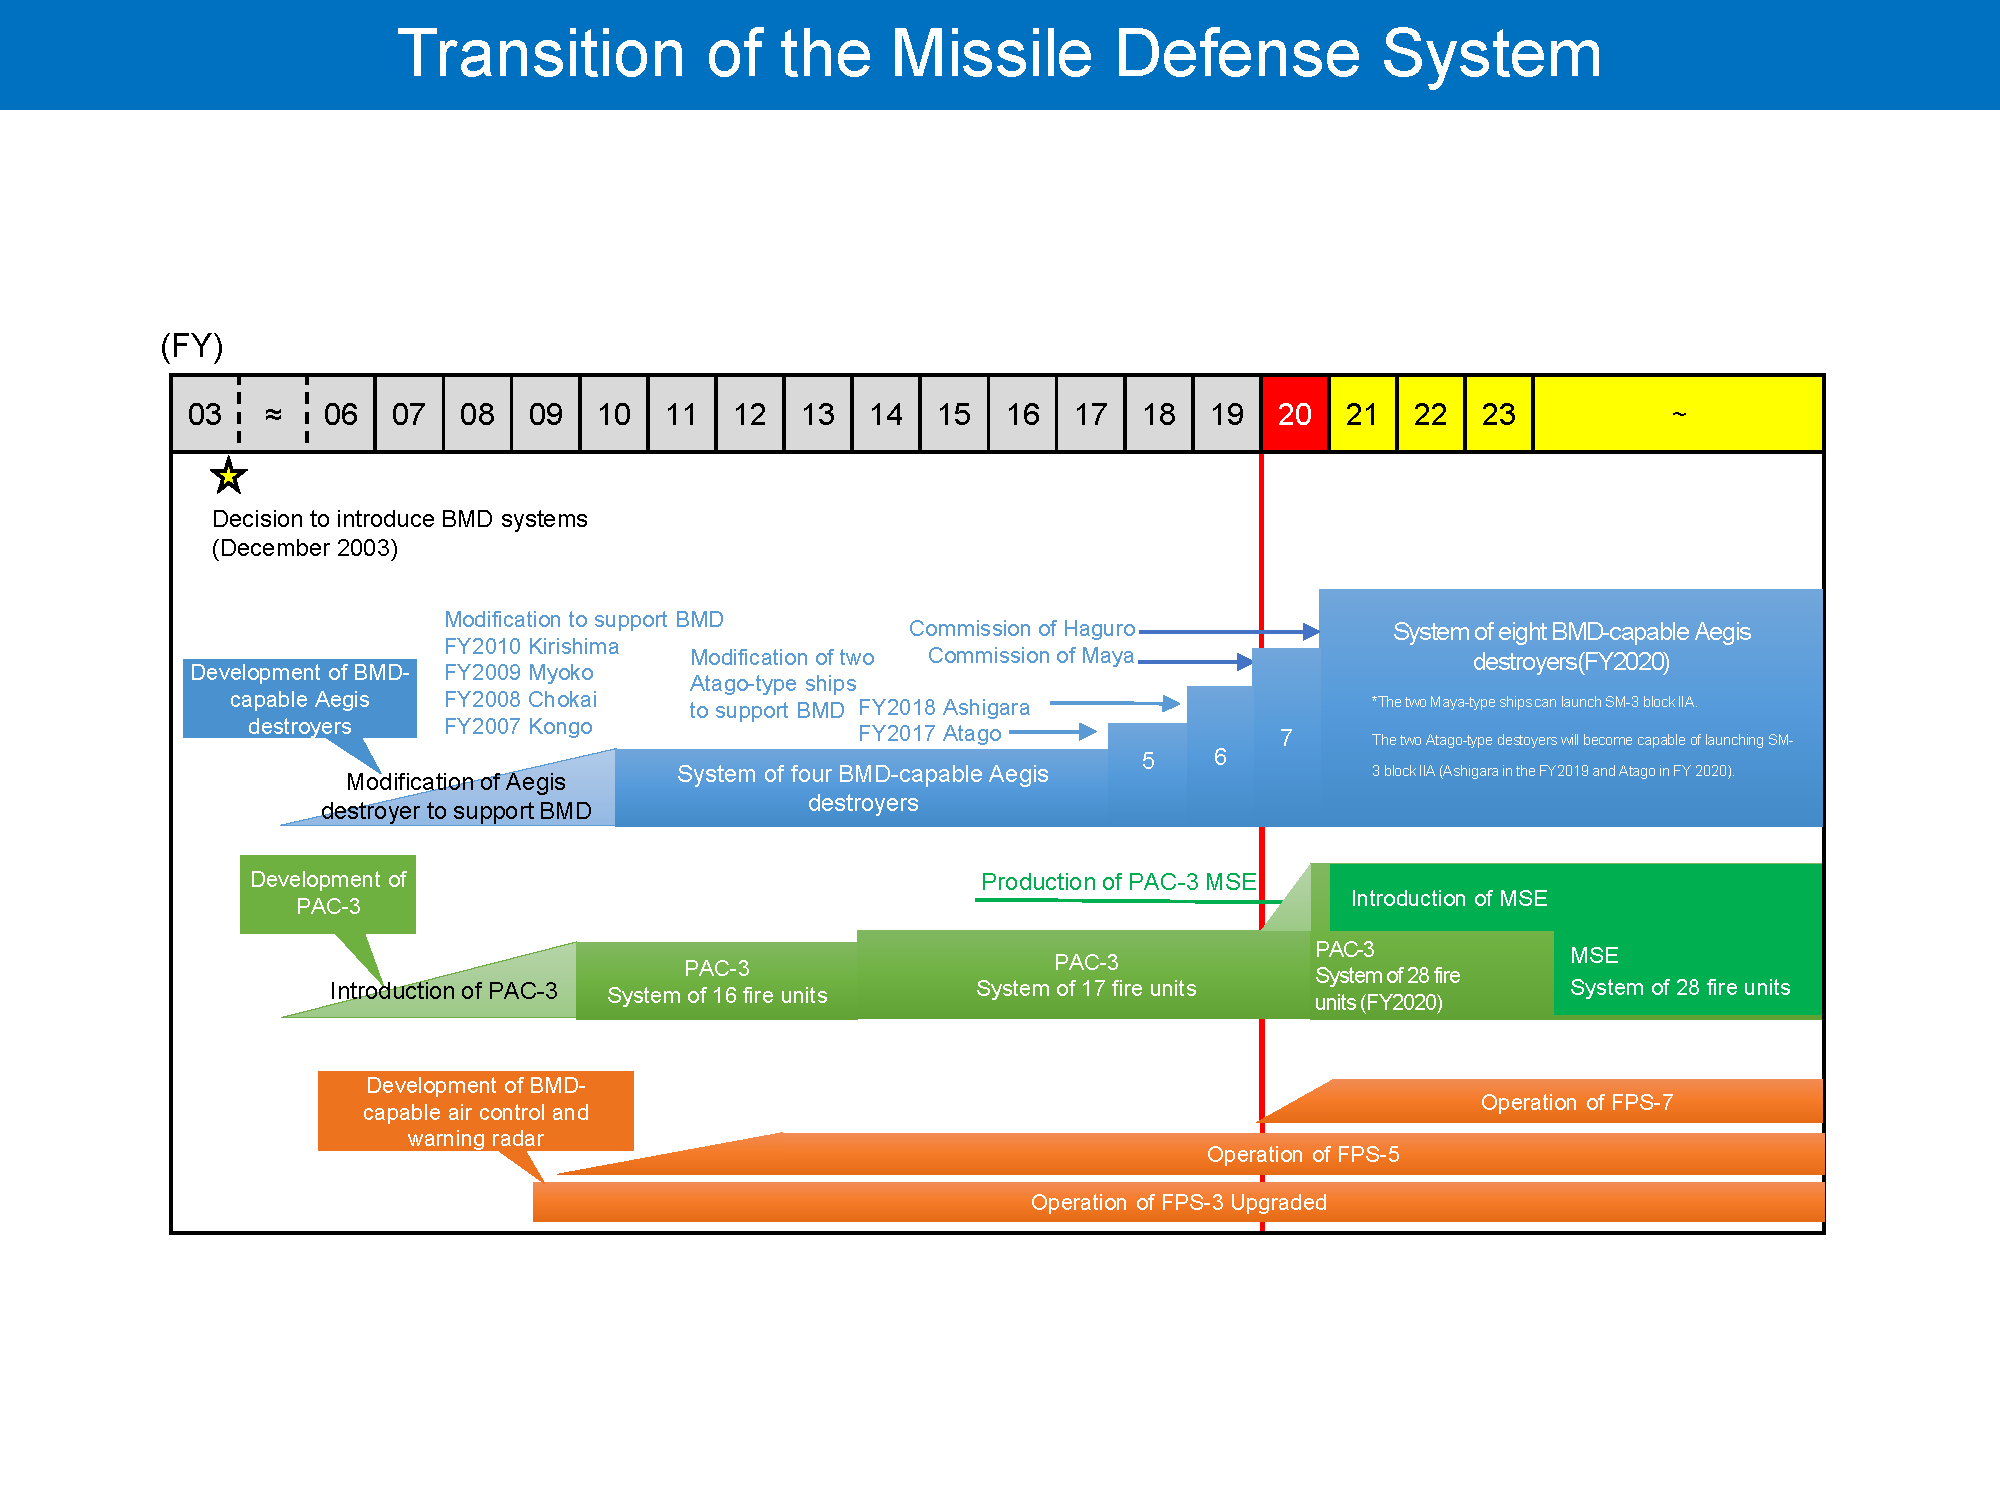 missile_defense_img06.png